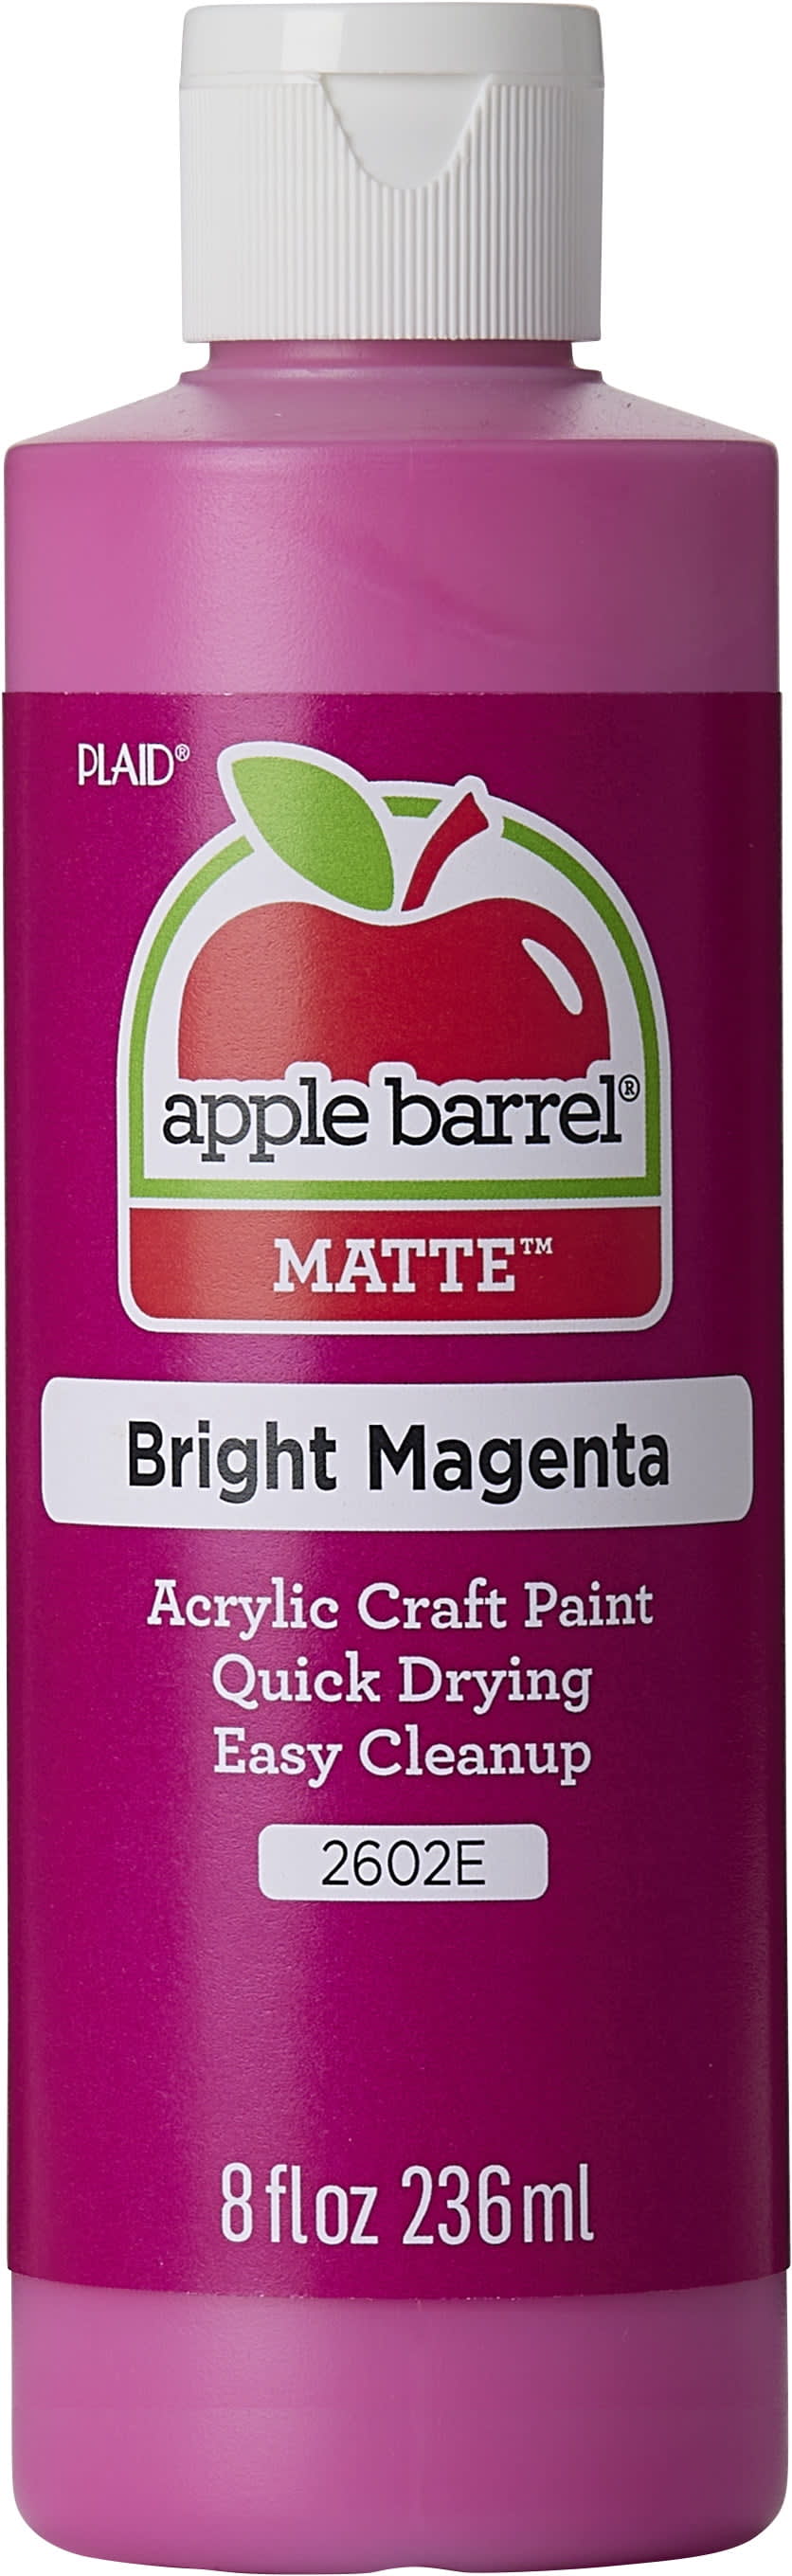 Apple Barrel Acrylic Craft Paint, Matte Finish, White, 2 fl oz - DroneUp  Delivery